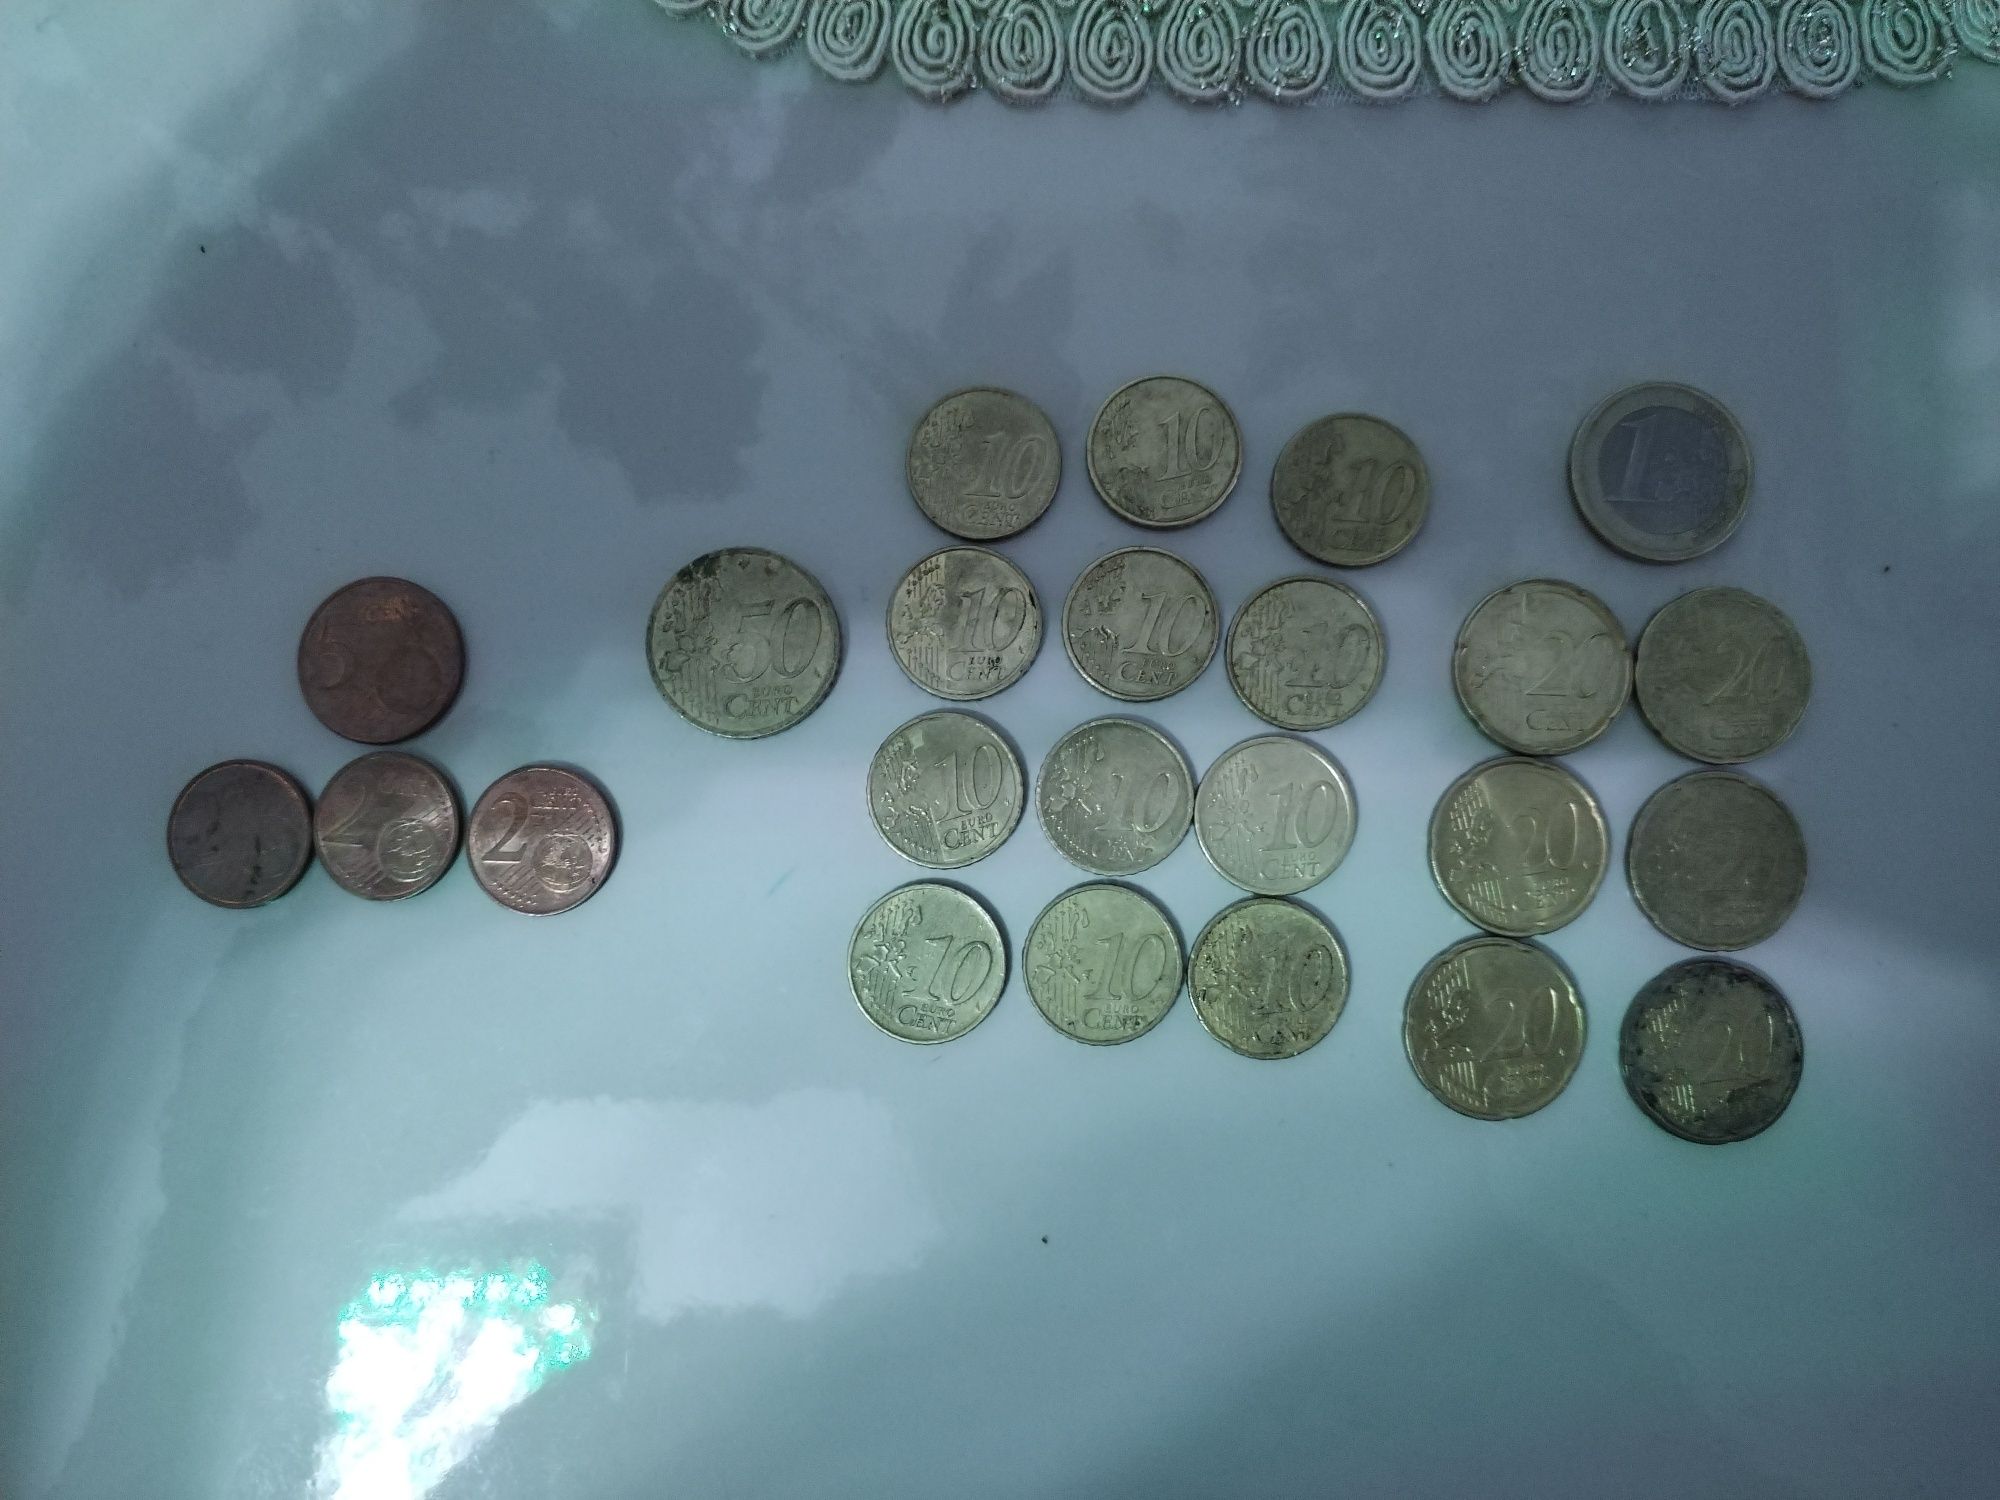 Monede vechi si pana in prezent